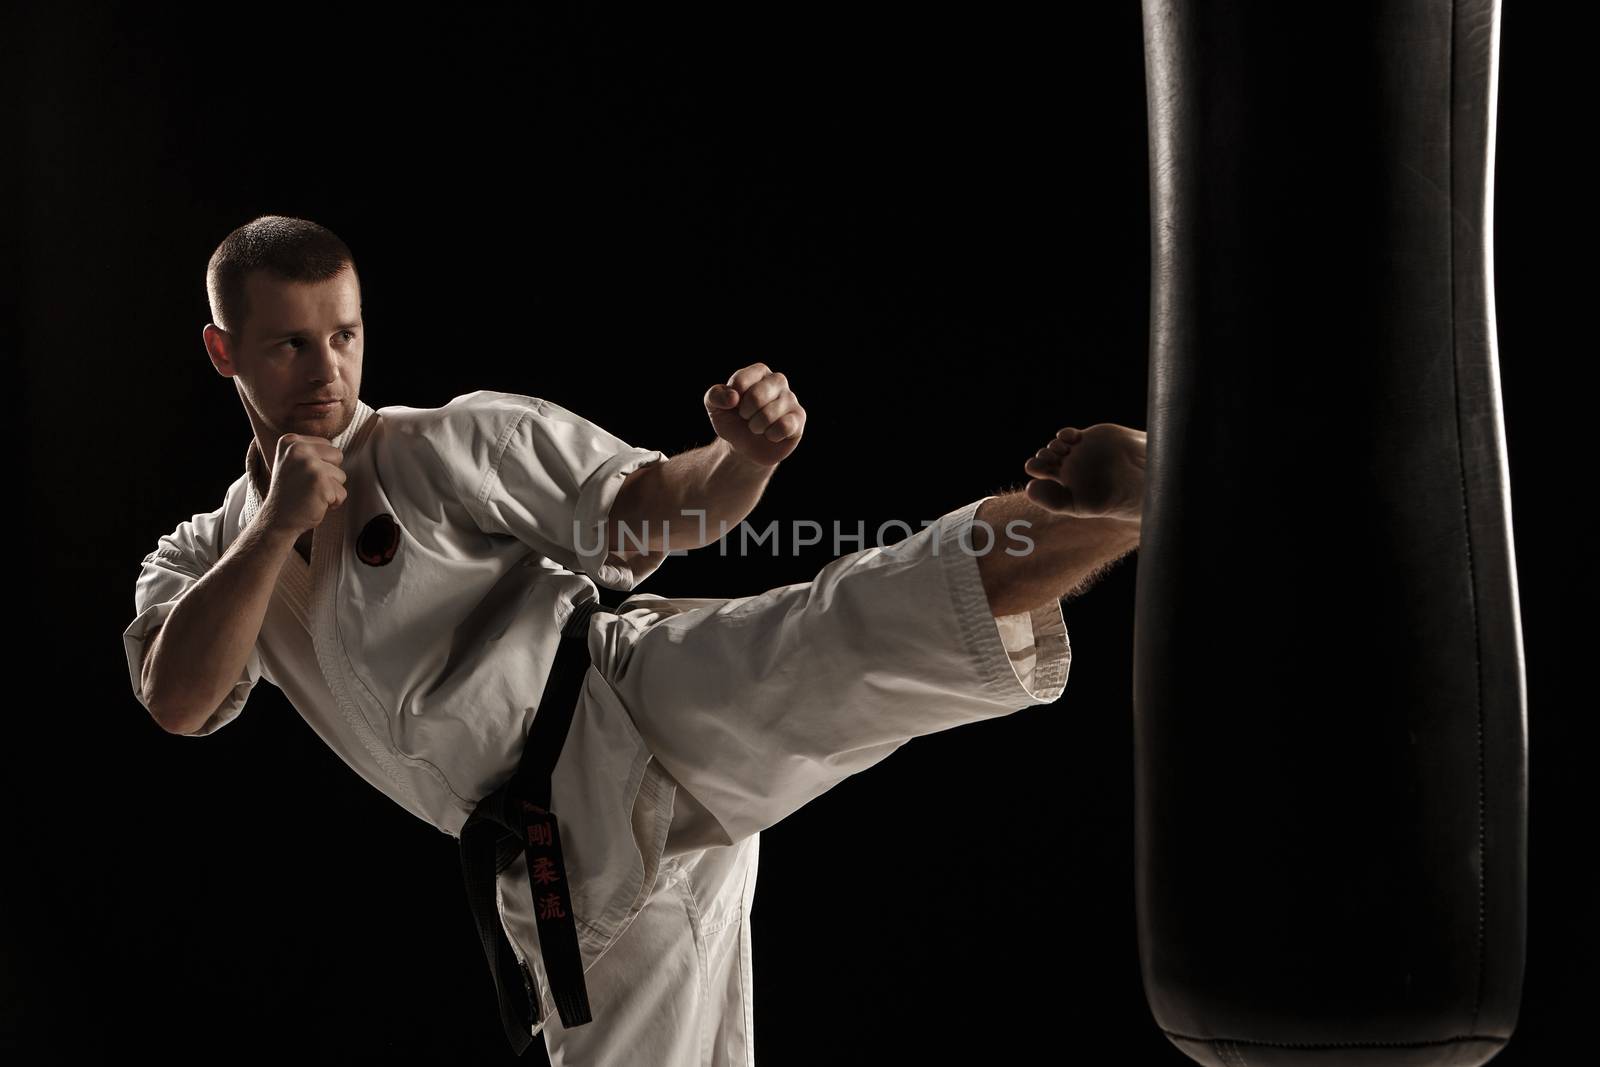 Man in white kimono training karate round kick in a punching bag over black background